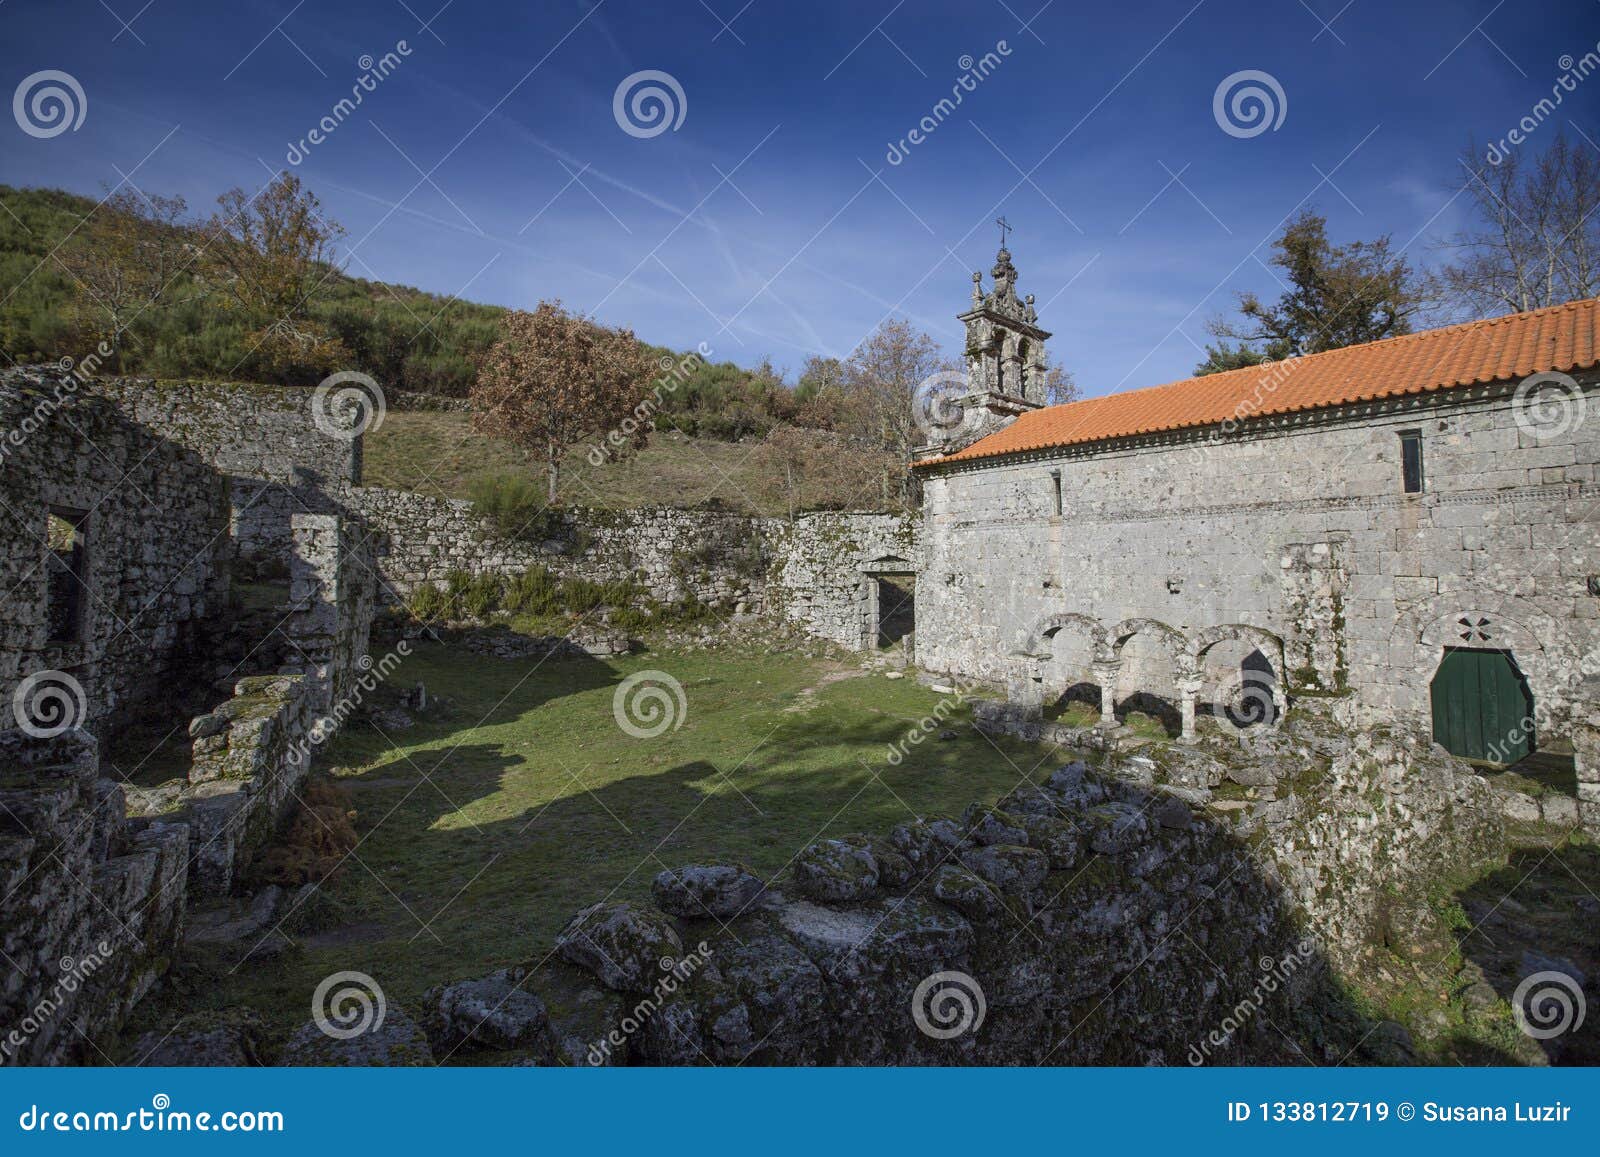 ruined monastery of pitoes das junias, municipality of montalegre. peneda gerÃÂªs national park. portugal.